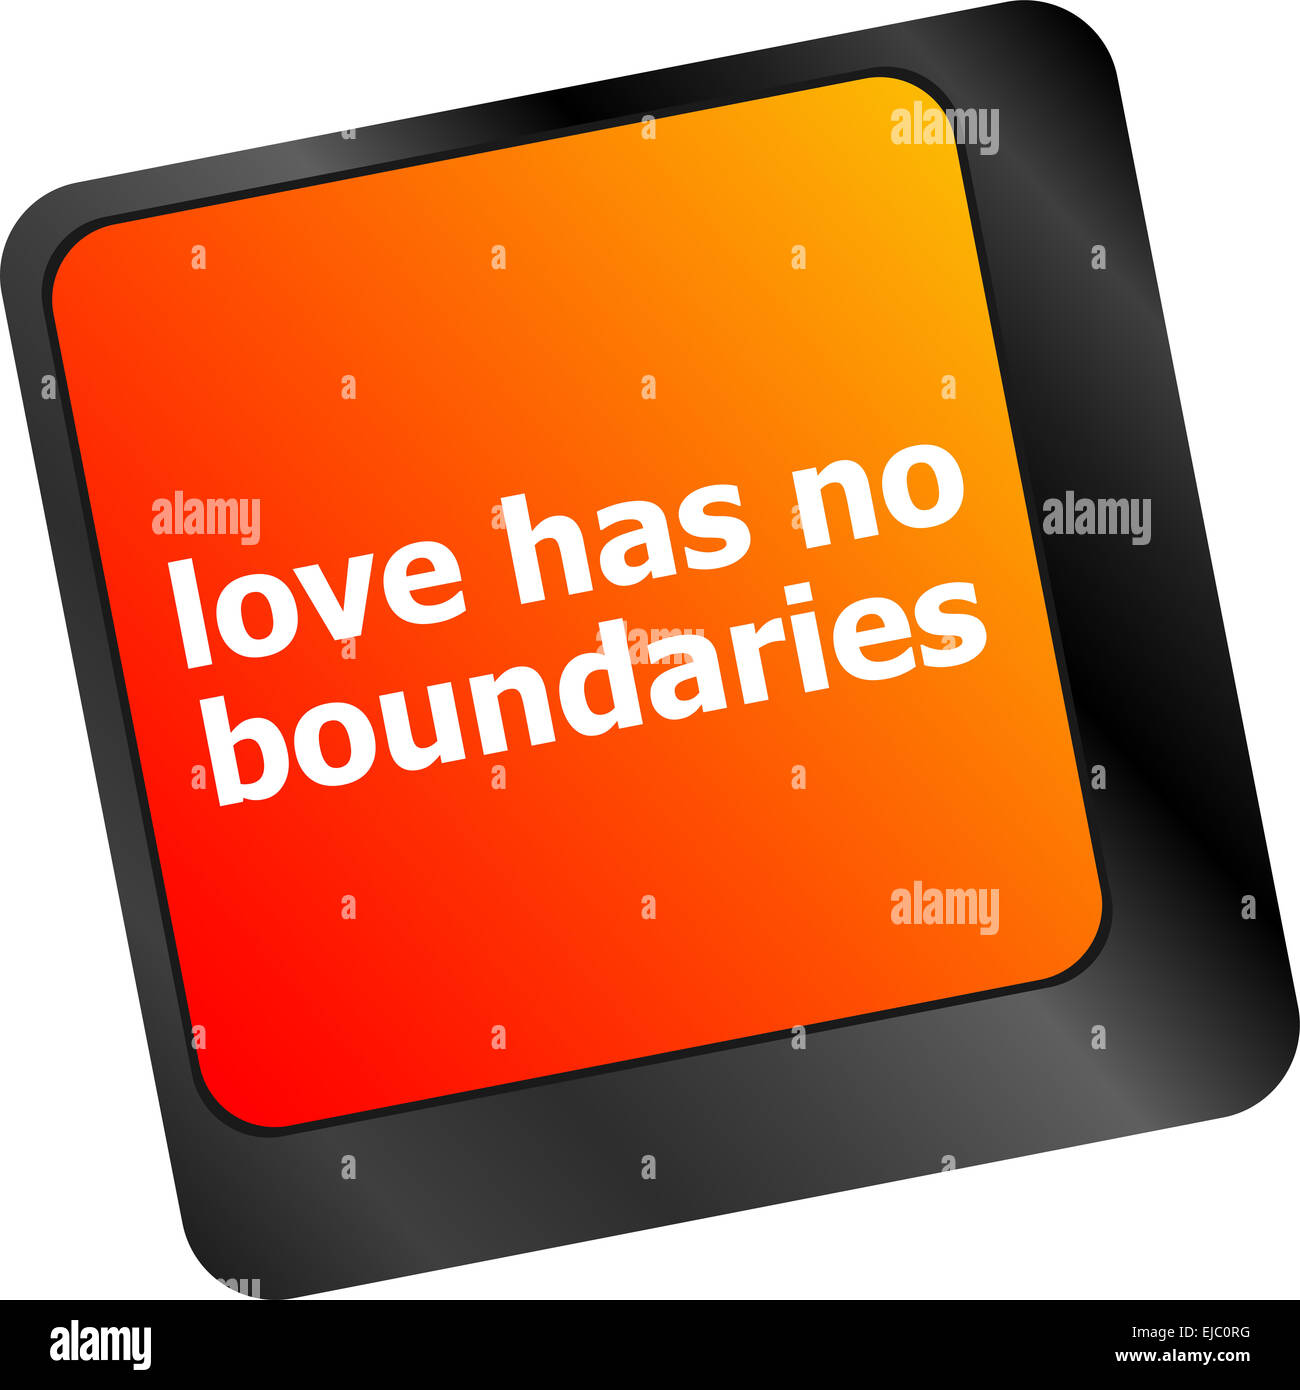 Wording love has no boundaries on computer keyboard key Stock Photo - Alamy